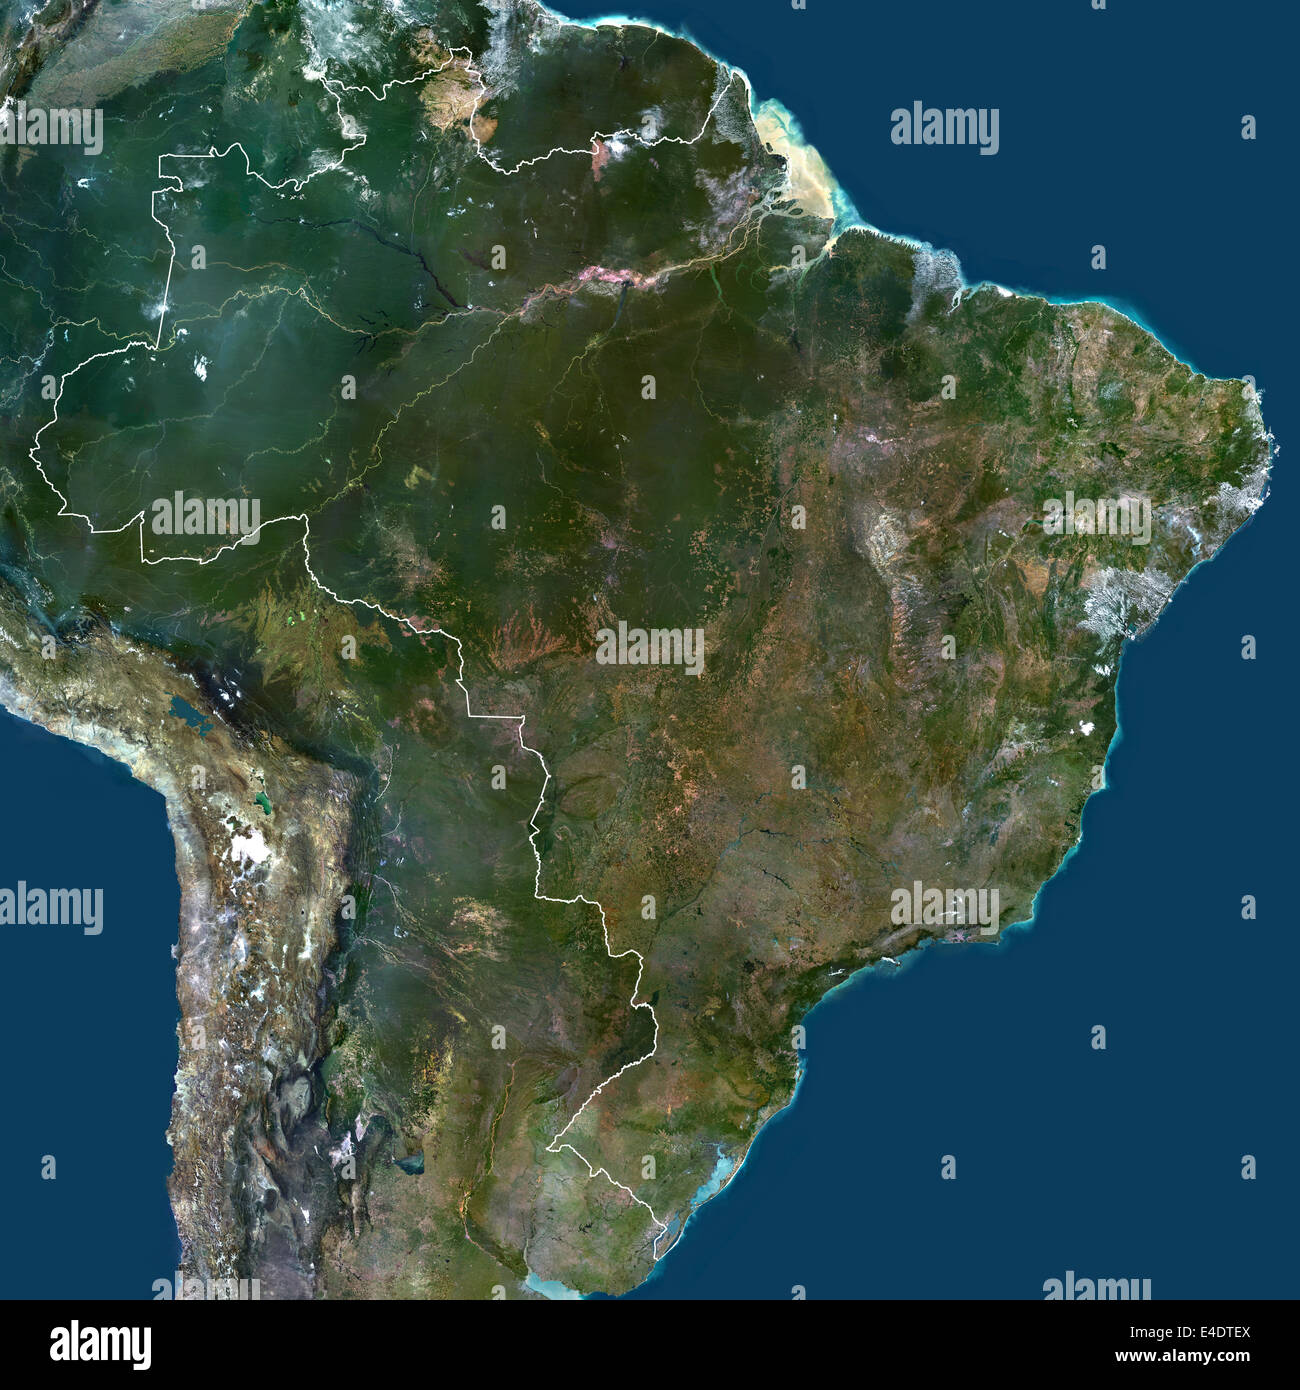 Brazil, South America, True Colour Satellite Image With Border. Satellite view of Brazil (with border), print size 42x42cm. This Stock Photo